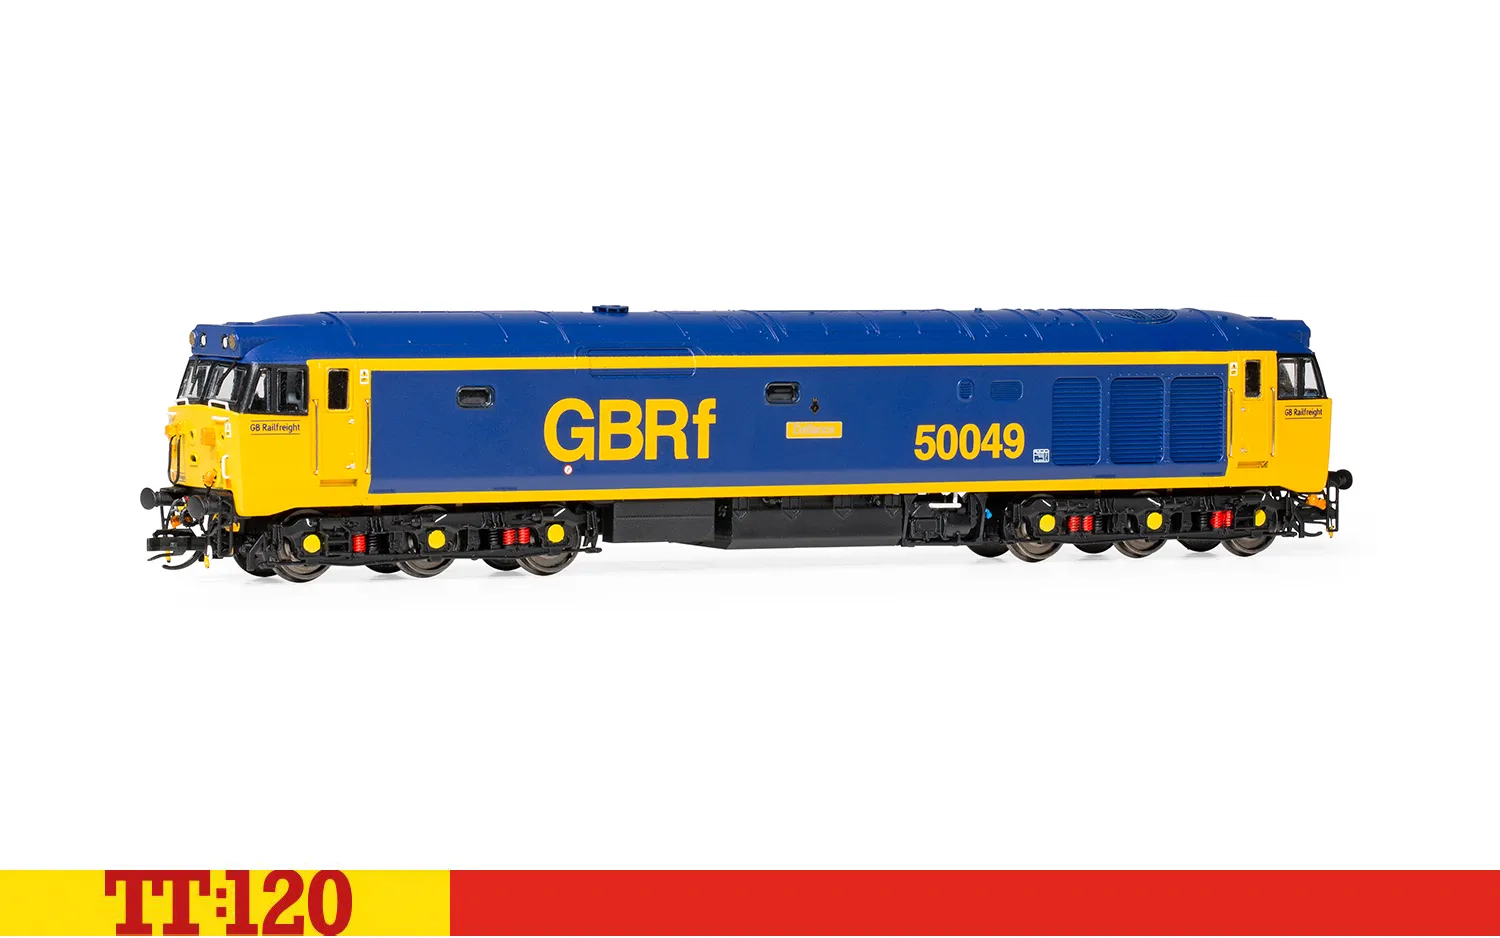 GBRf, Classe 50, Co-Co, 50049 'Defiance' - Ep. 11